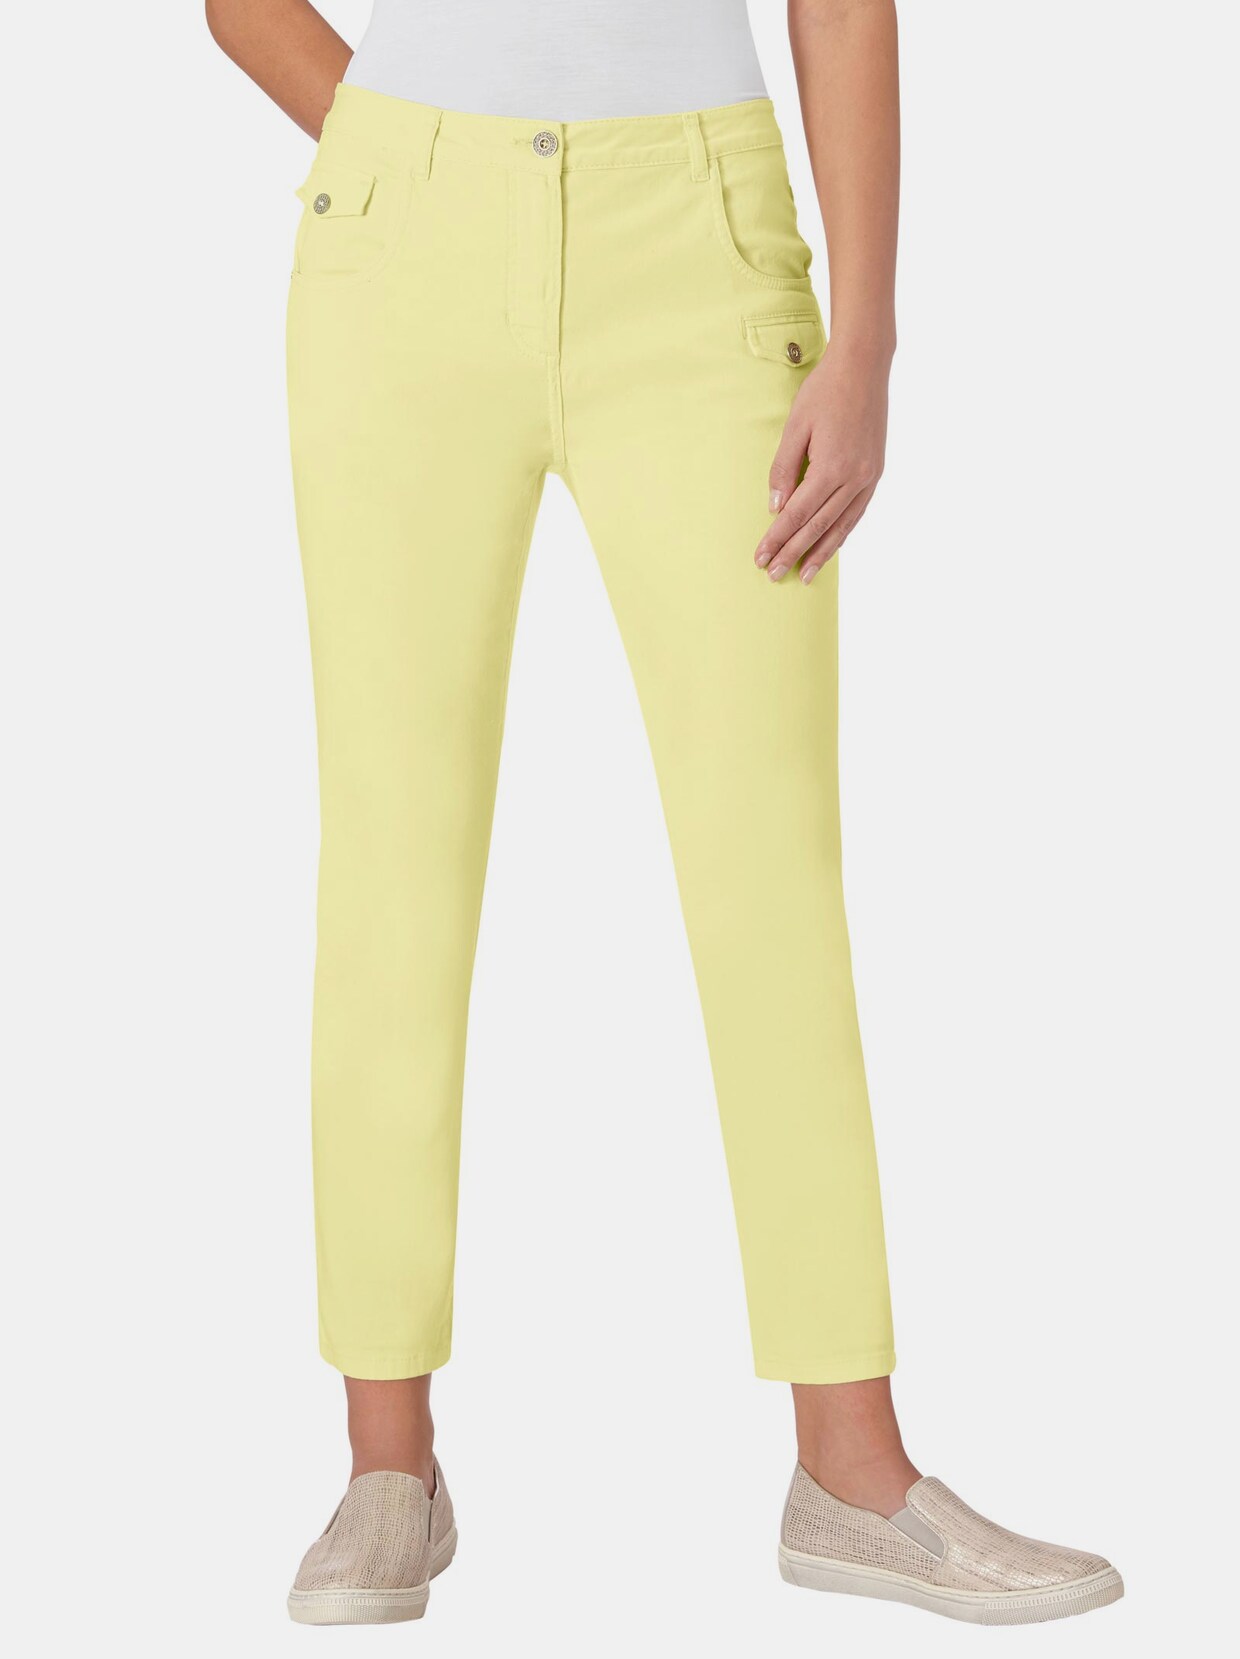 pantalon extensible - jaune